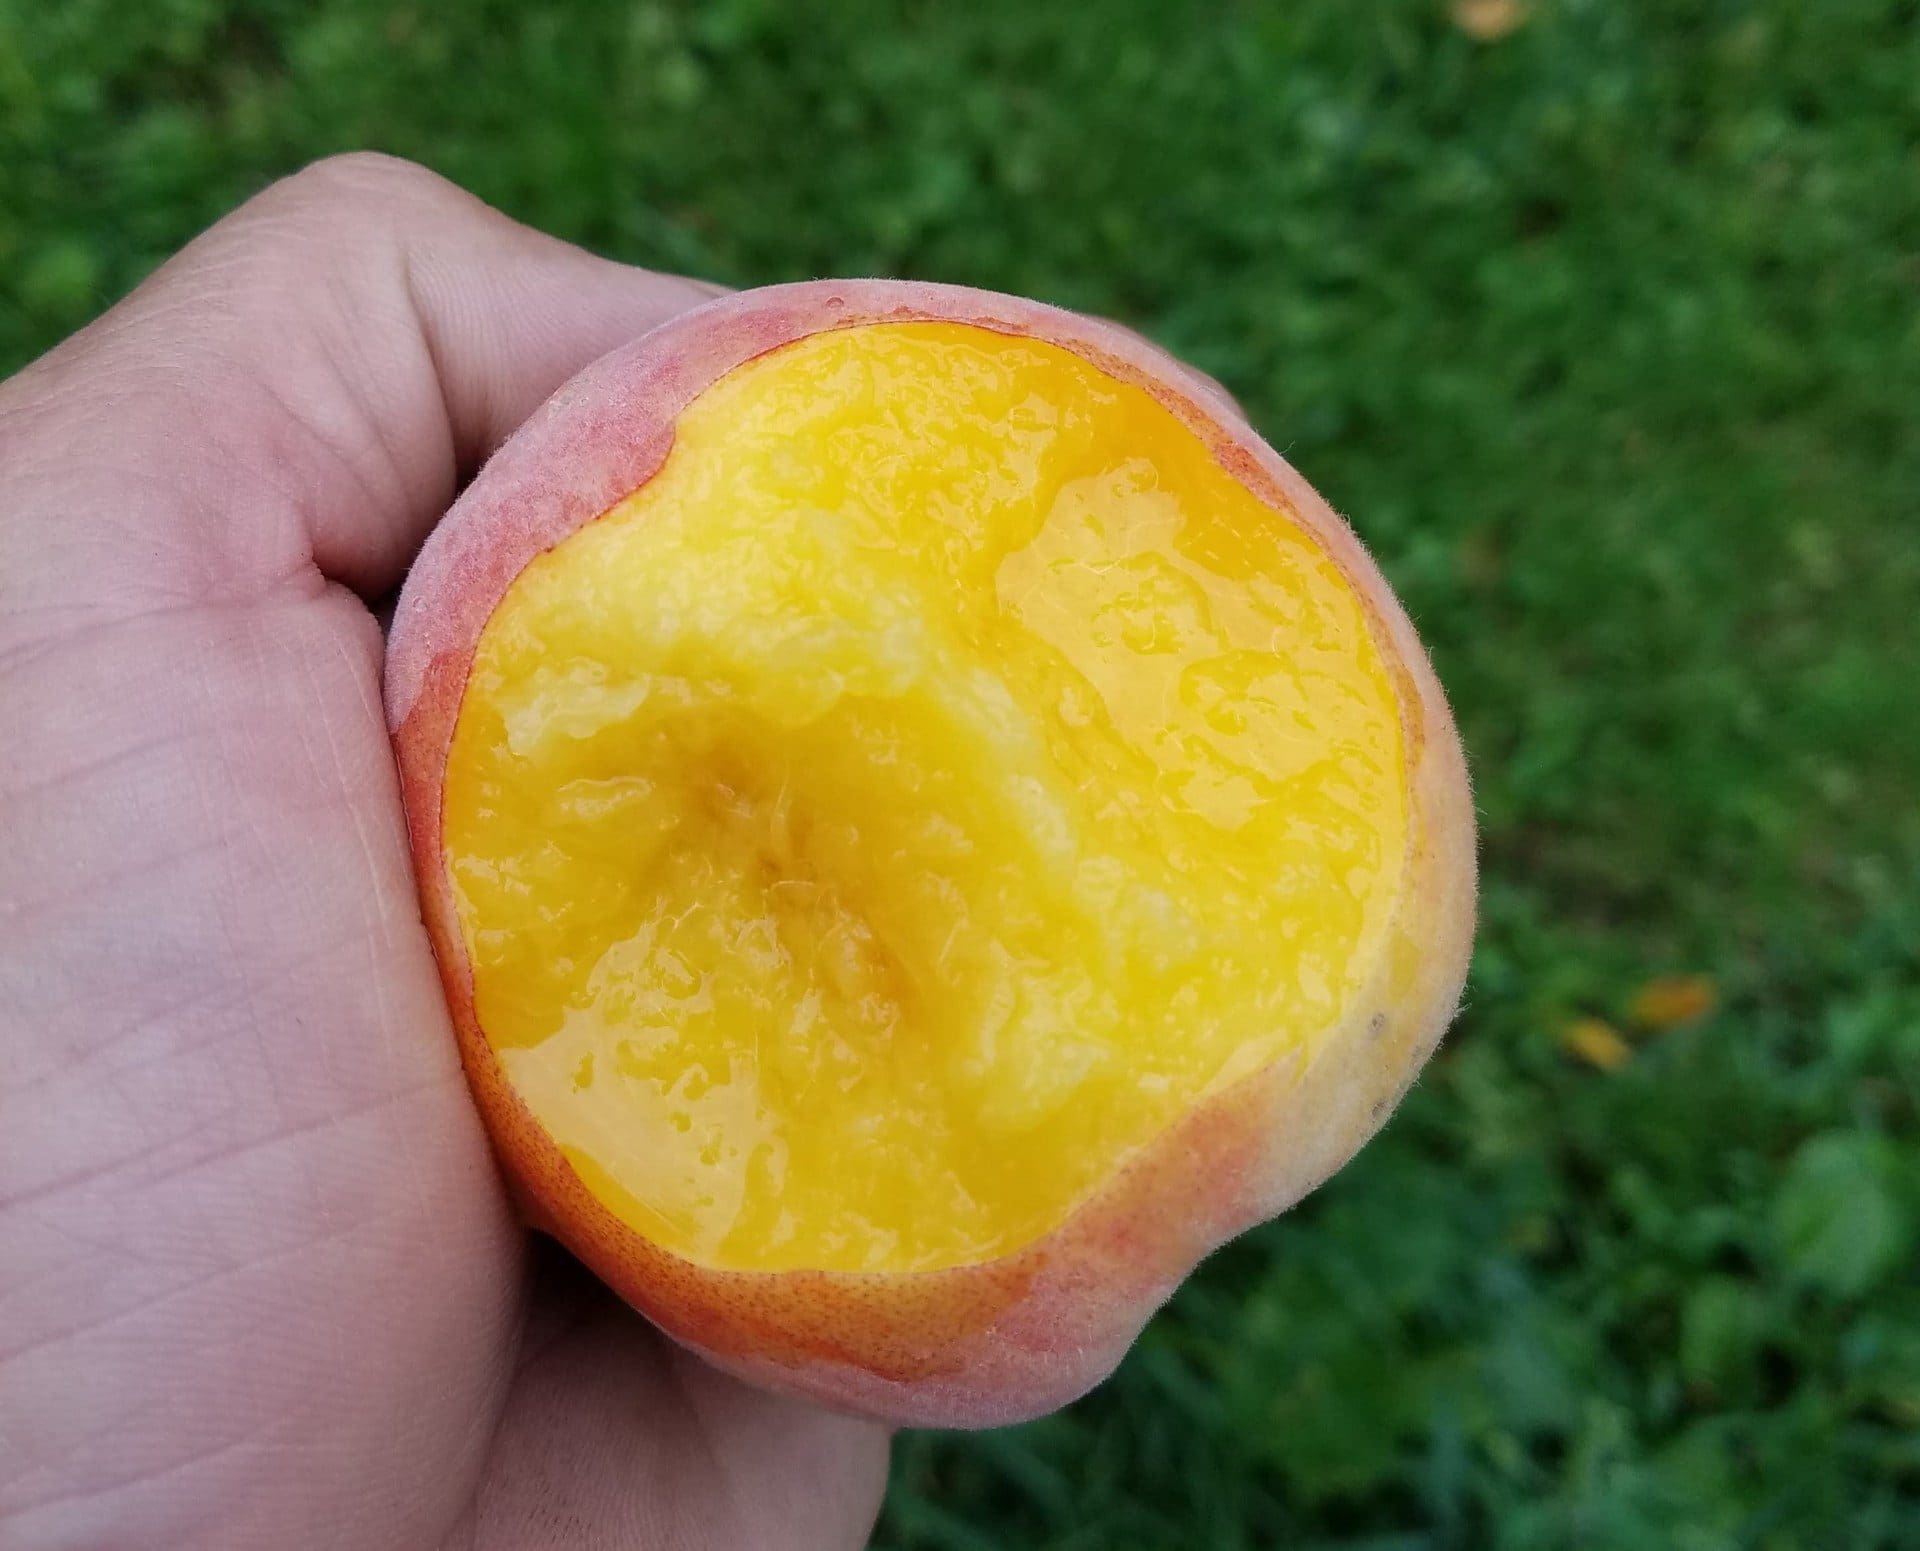 Shall I Eat a Peach